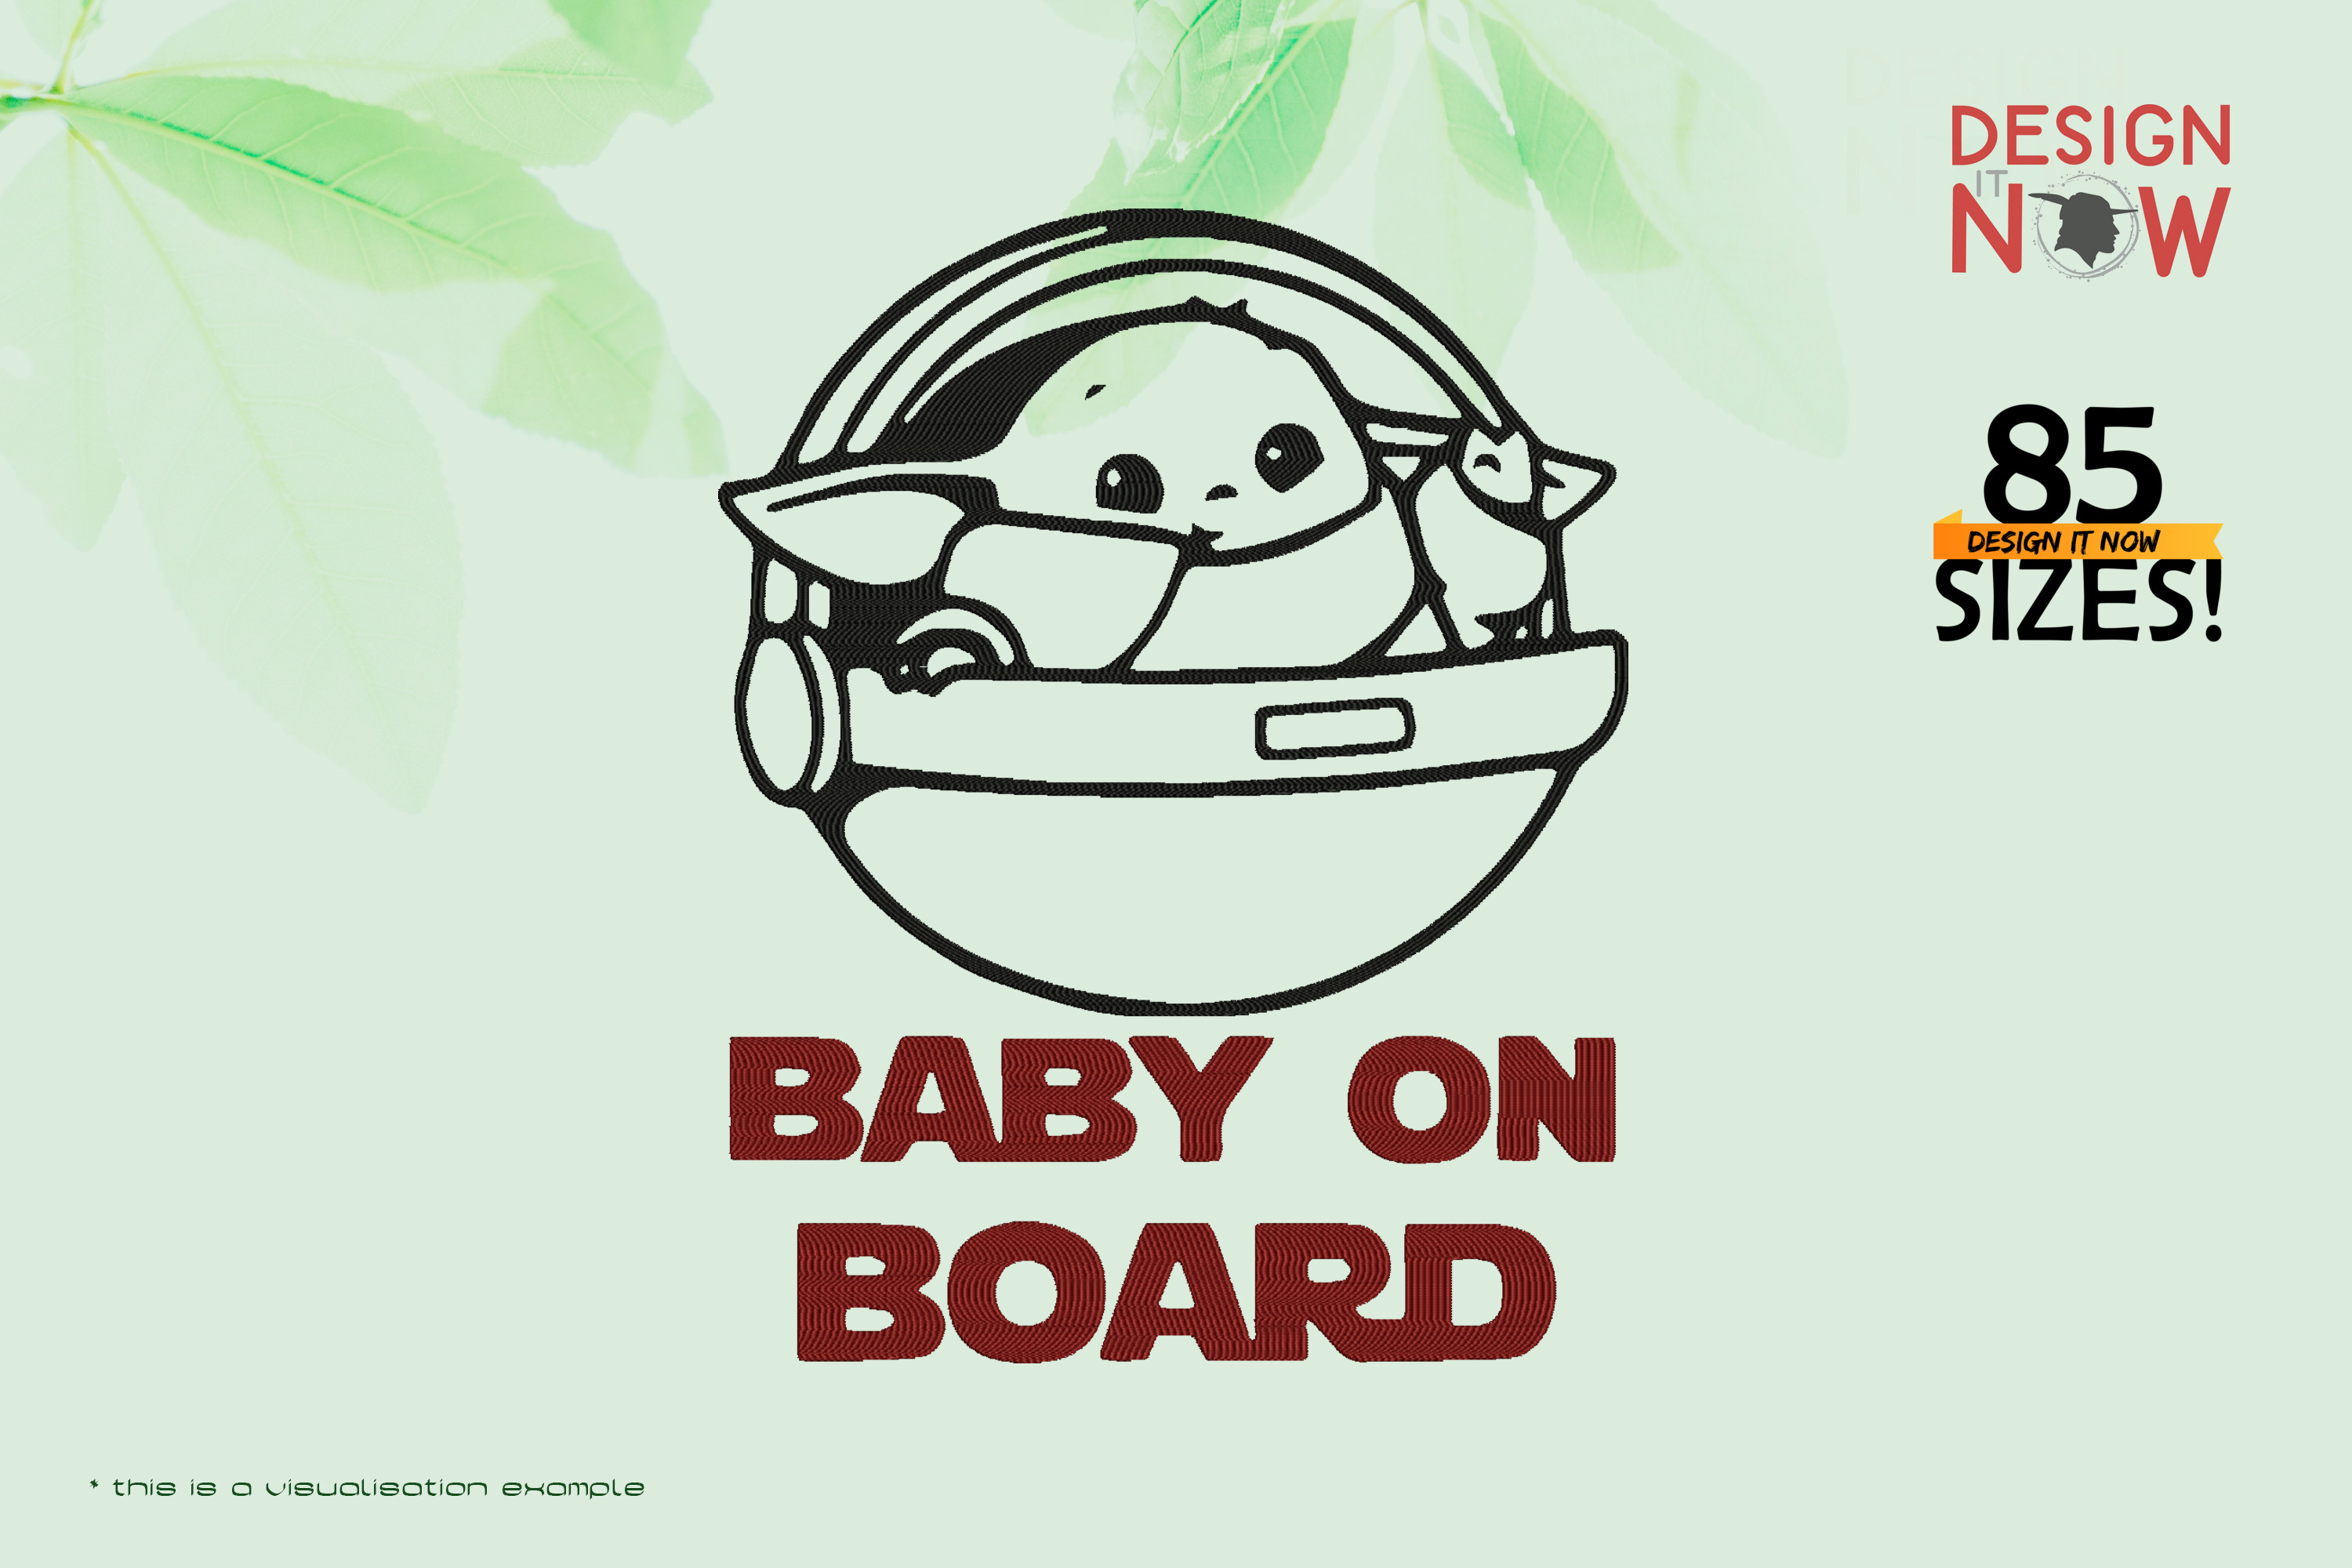 Tribute To Fictional Character Grogu aka Baby Yoda (Baby On Board)